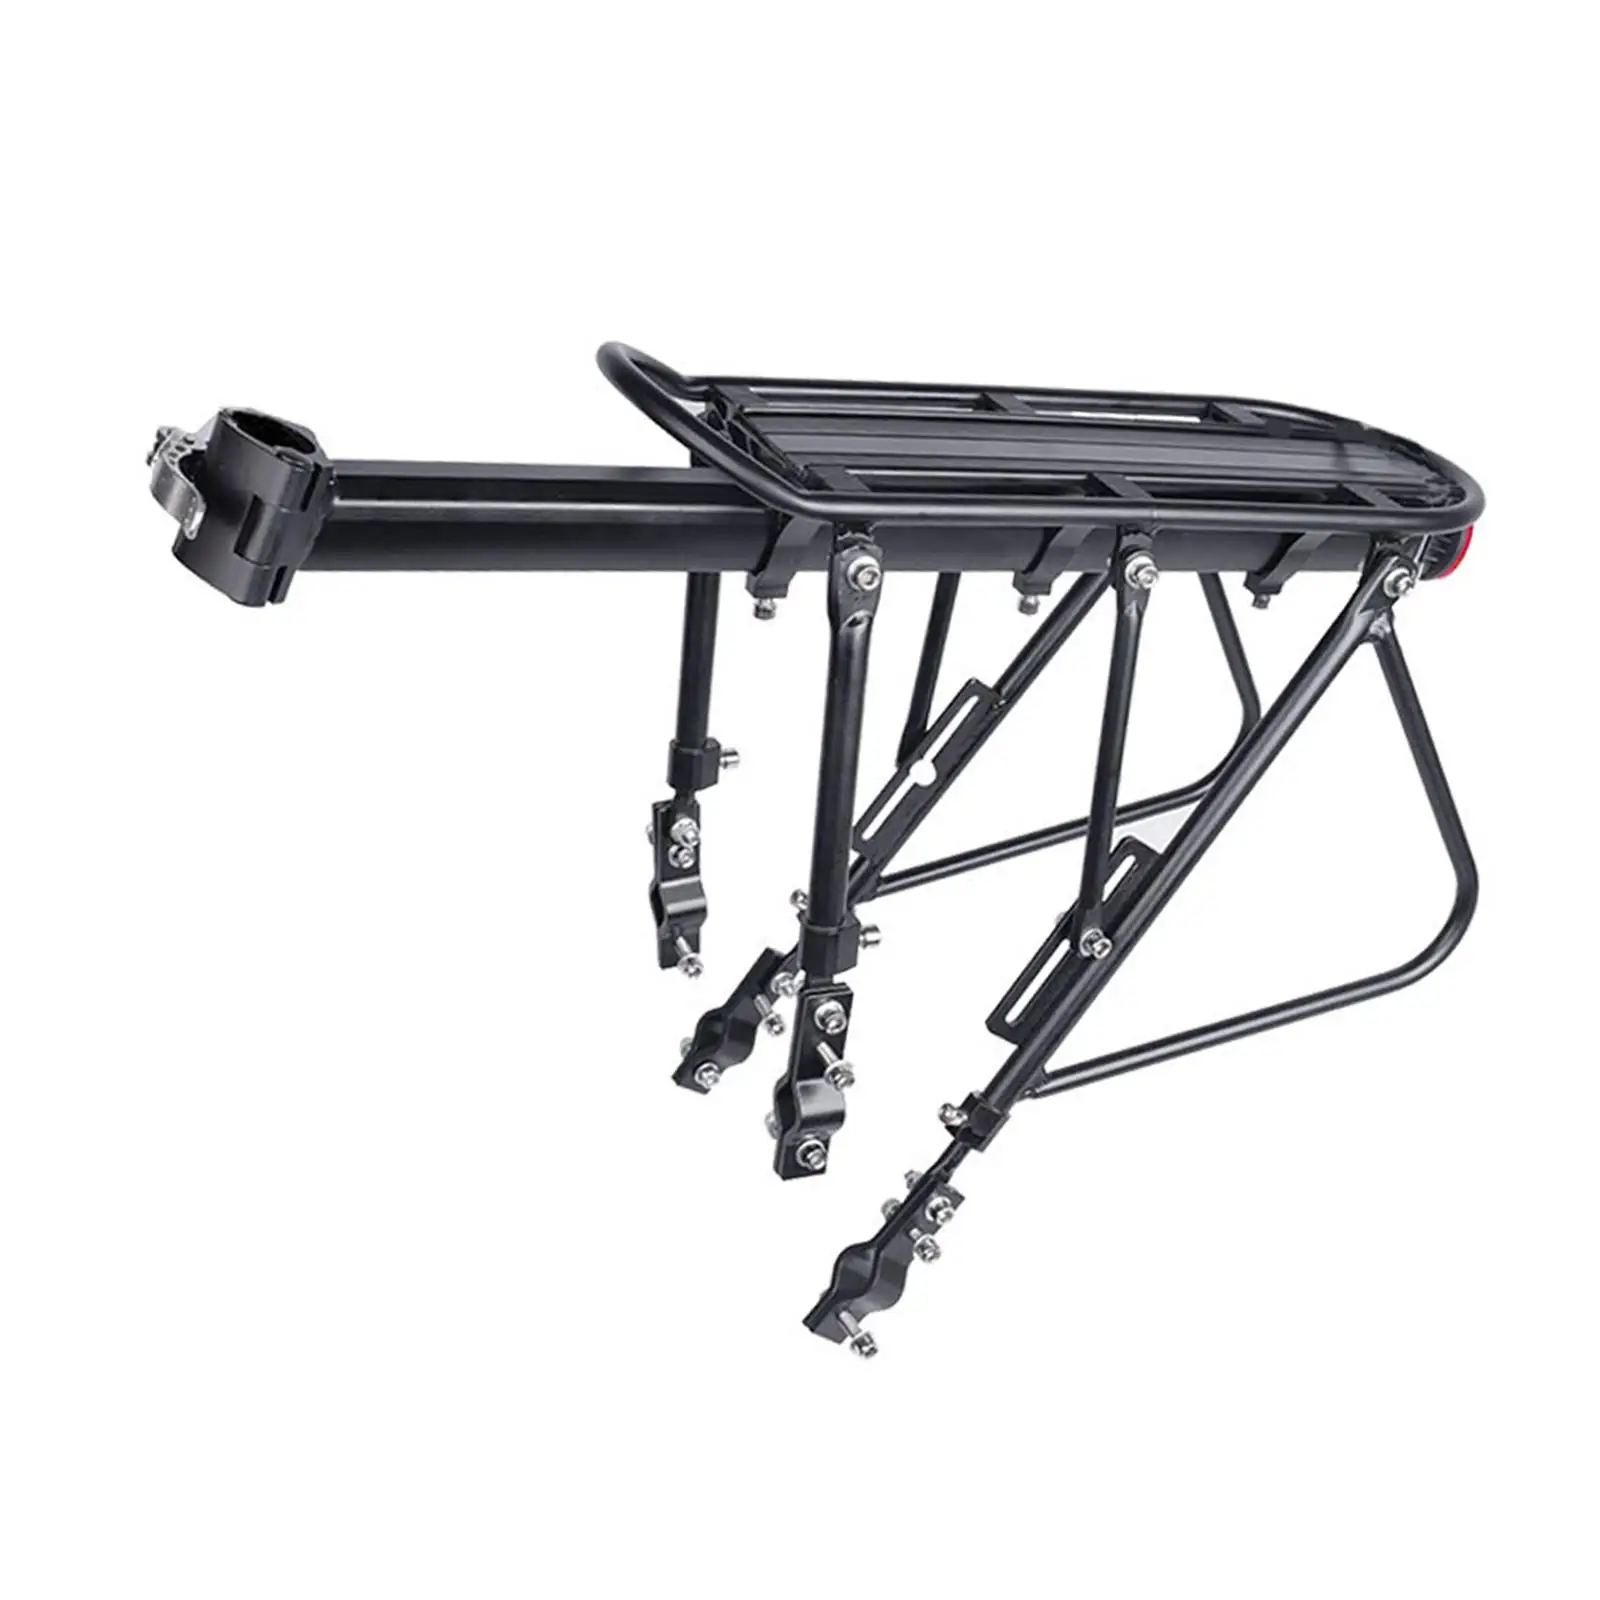 Rear Bike Rack 132-242 lbs Capacity Accessories Easy Installation Bike Luggage Carrier Bike Cargo Rack for Road Bike